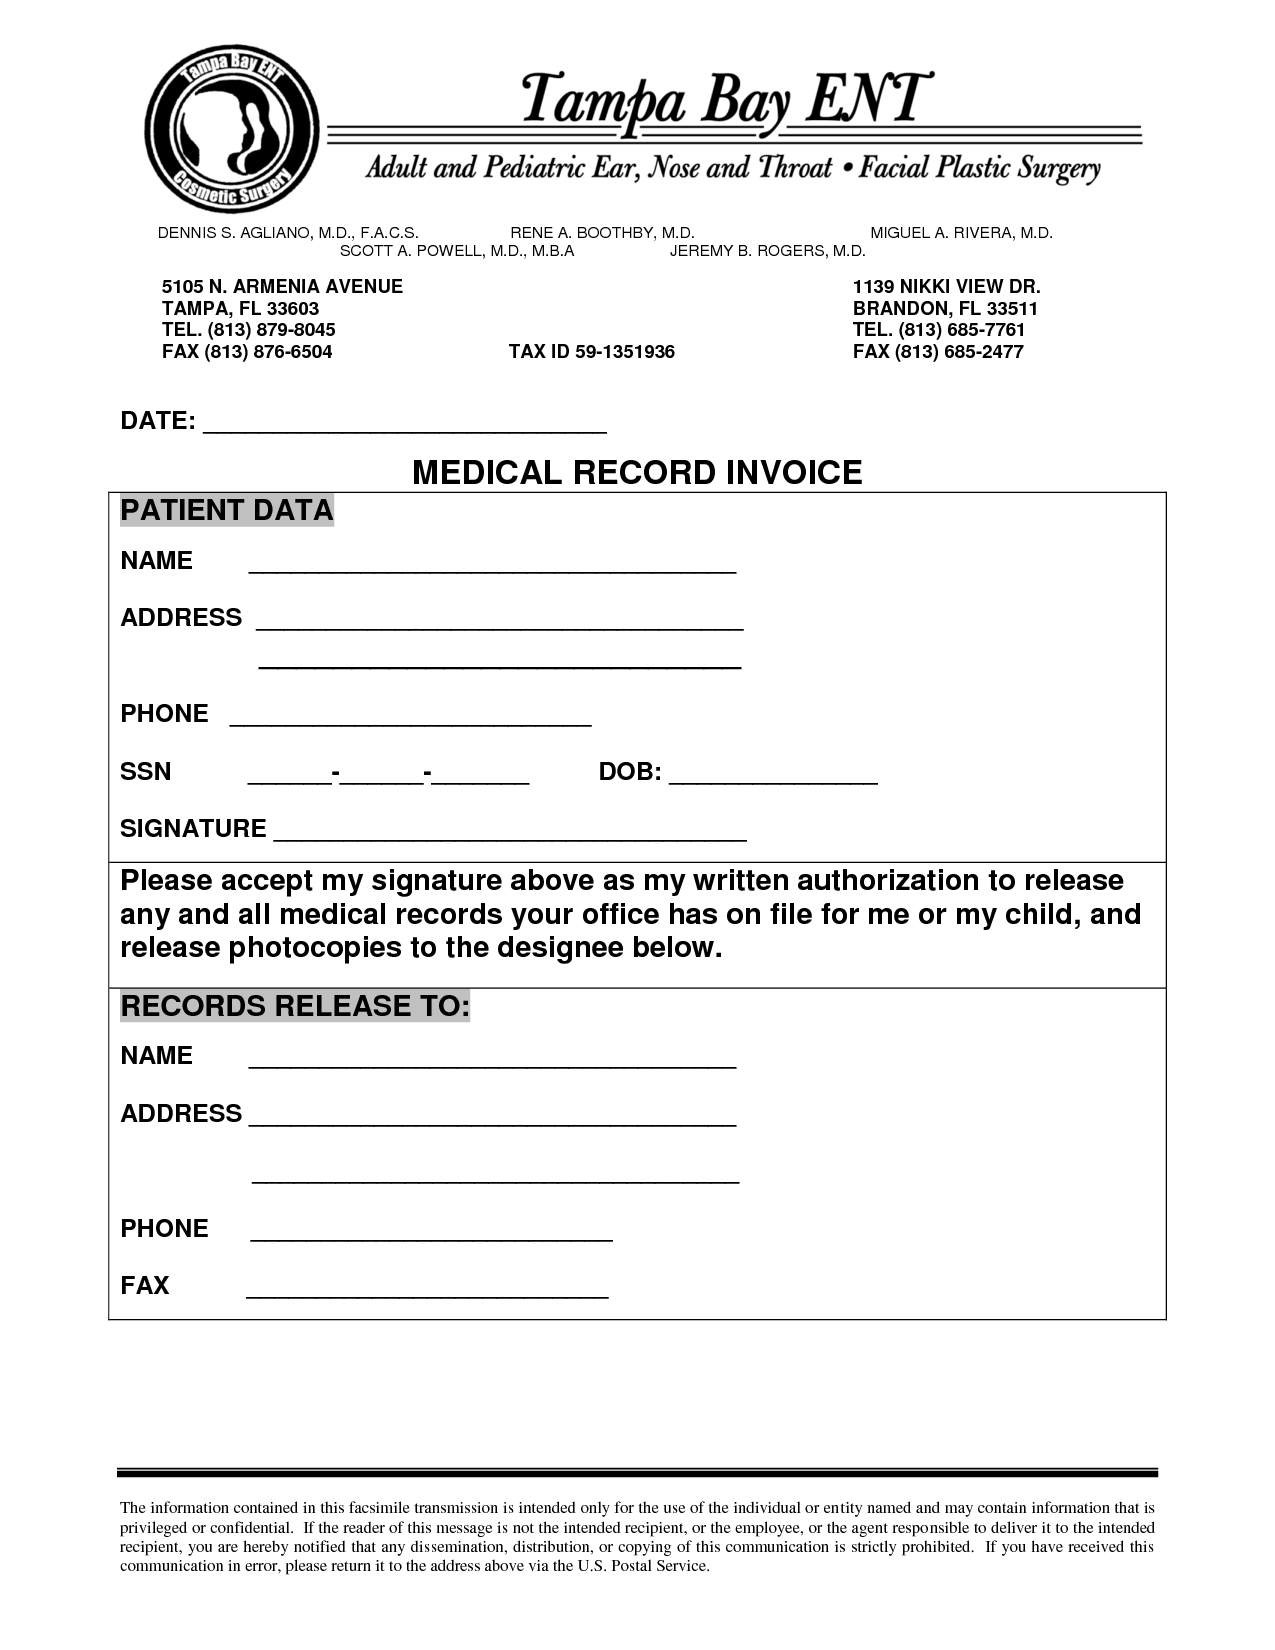 interpreter resume medical records invoice sample translator sample medical invoice